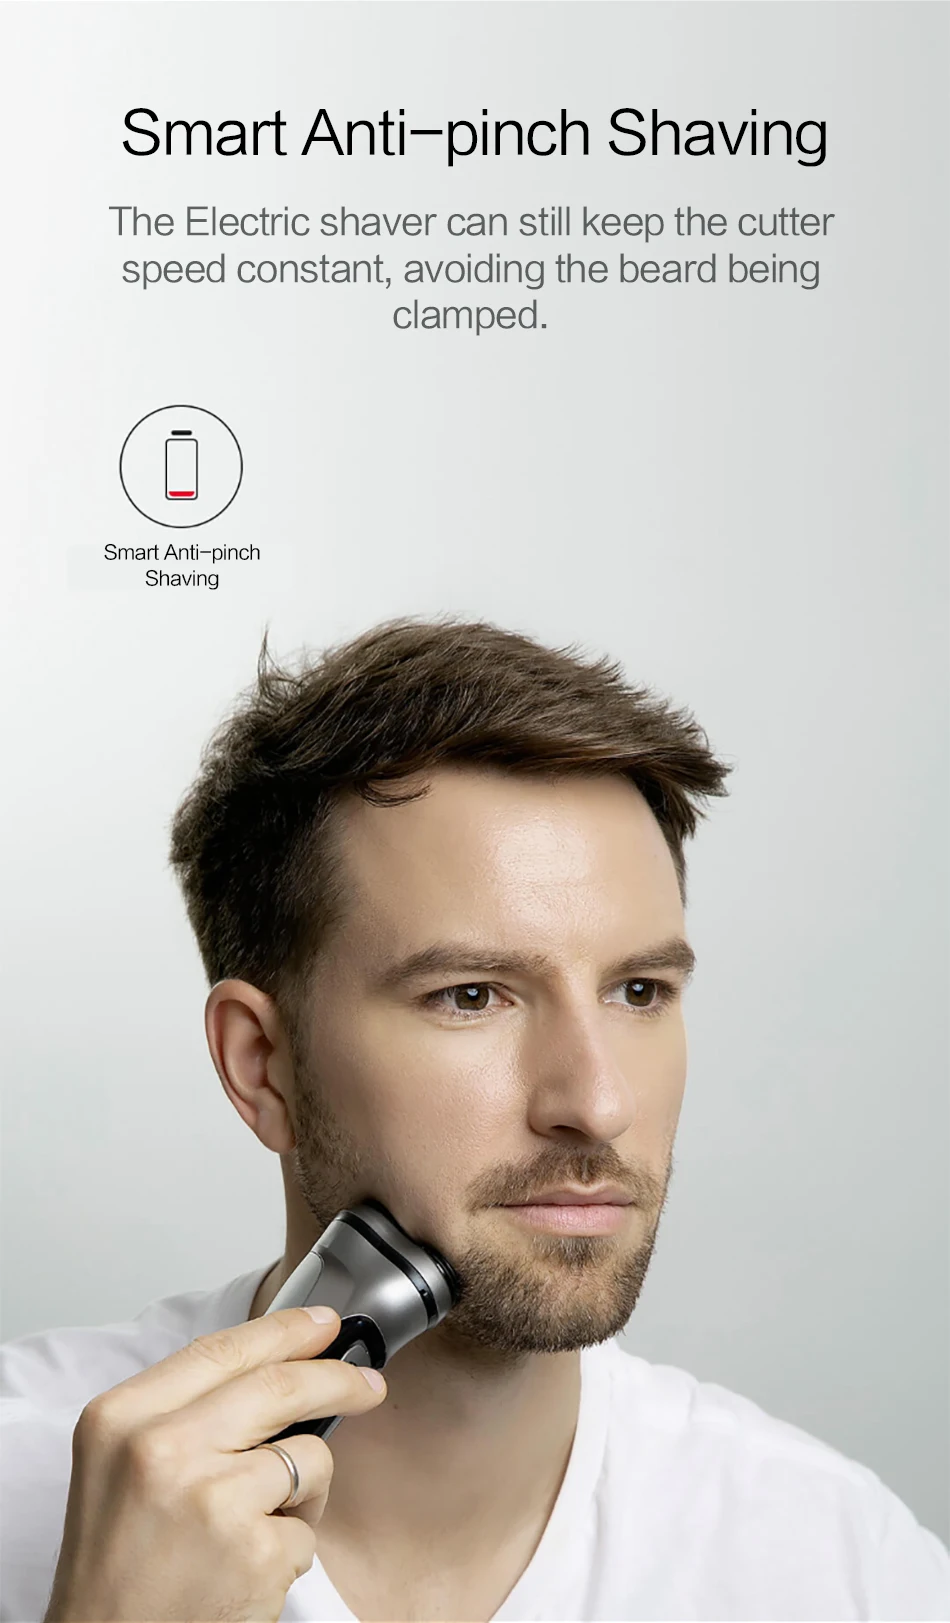 Xiaomi Enchen BlackStone 3D бритва для мужчин триммер для бороды моющийся type-C USB Перезаряжаемый смарт-контроль